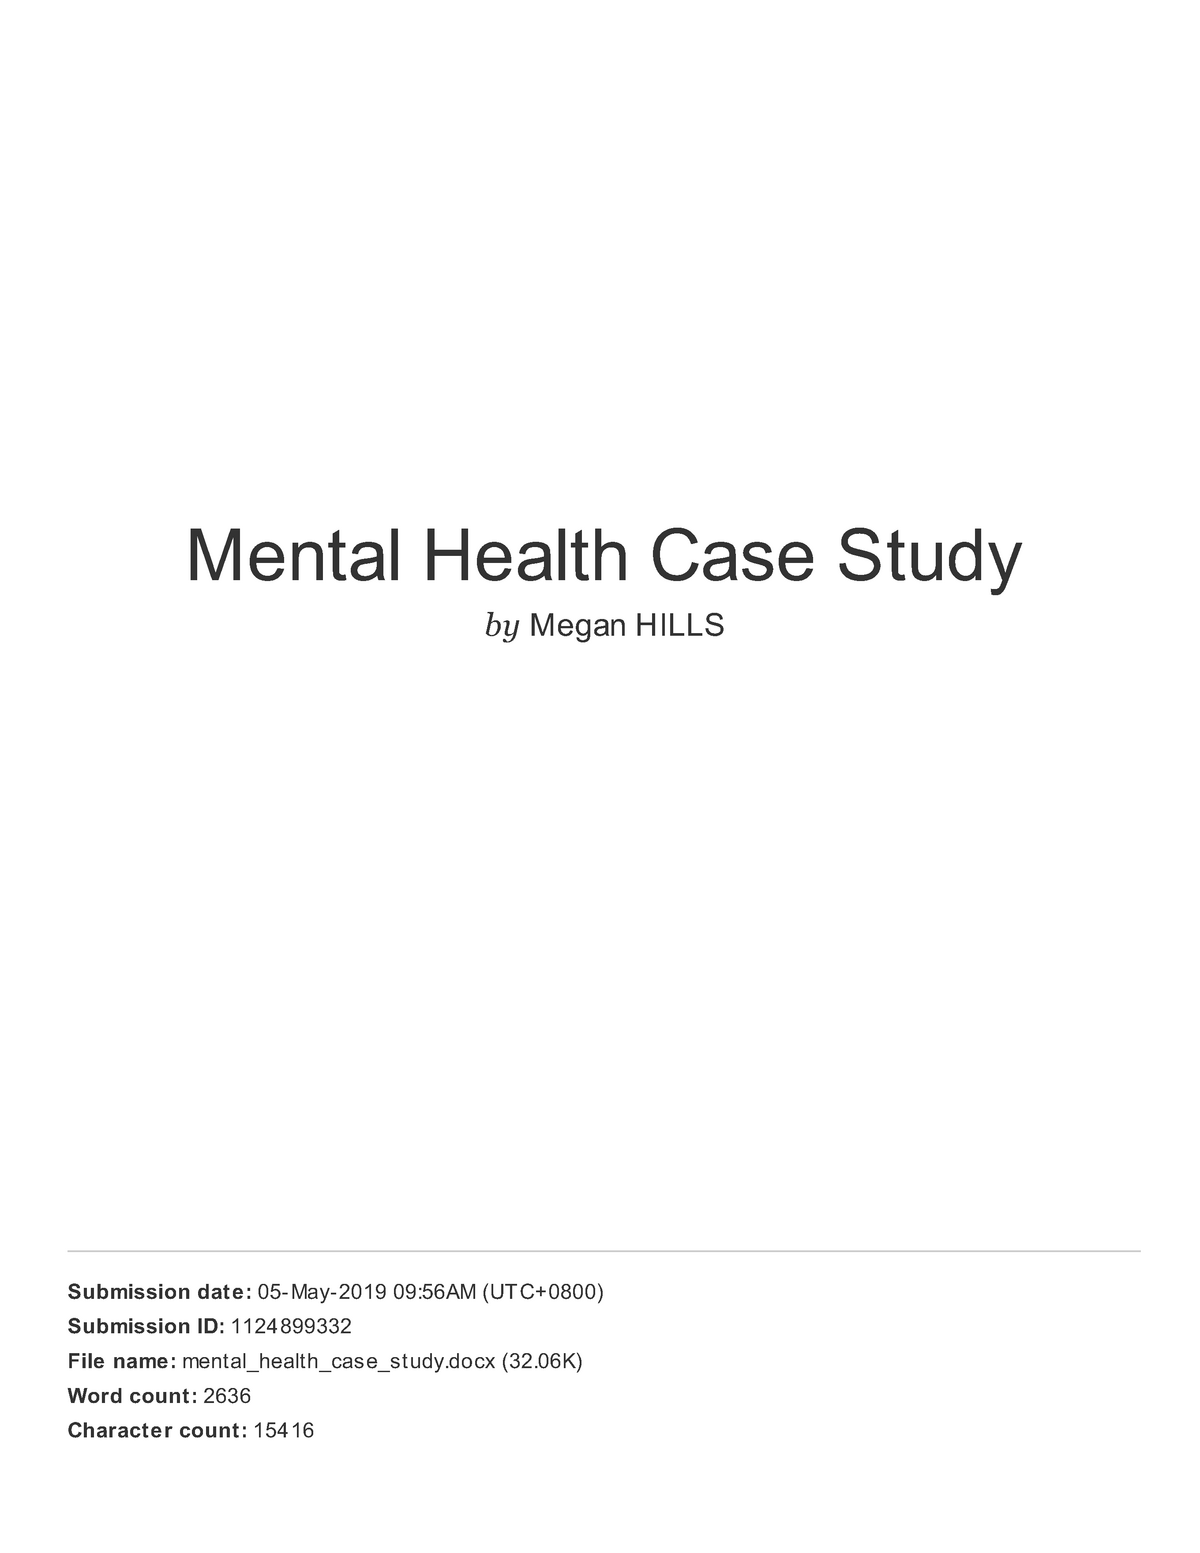 mental health case study questions